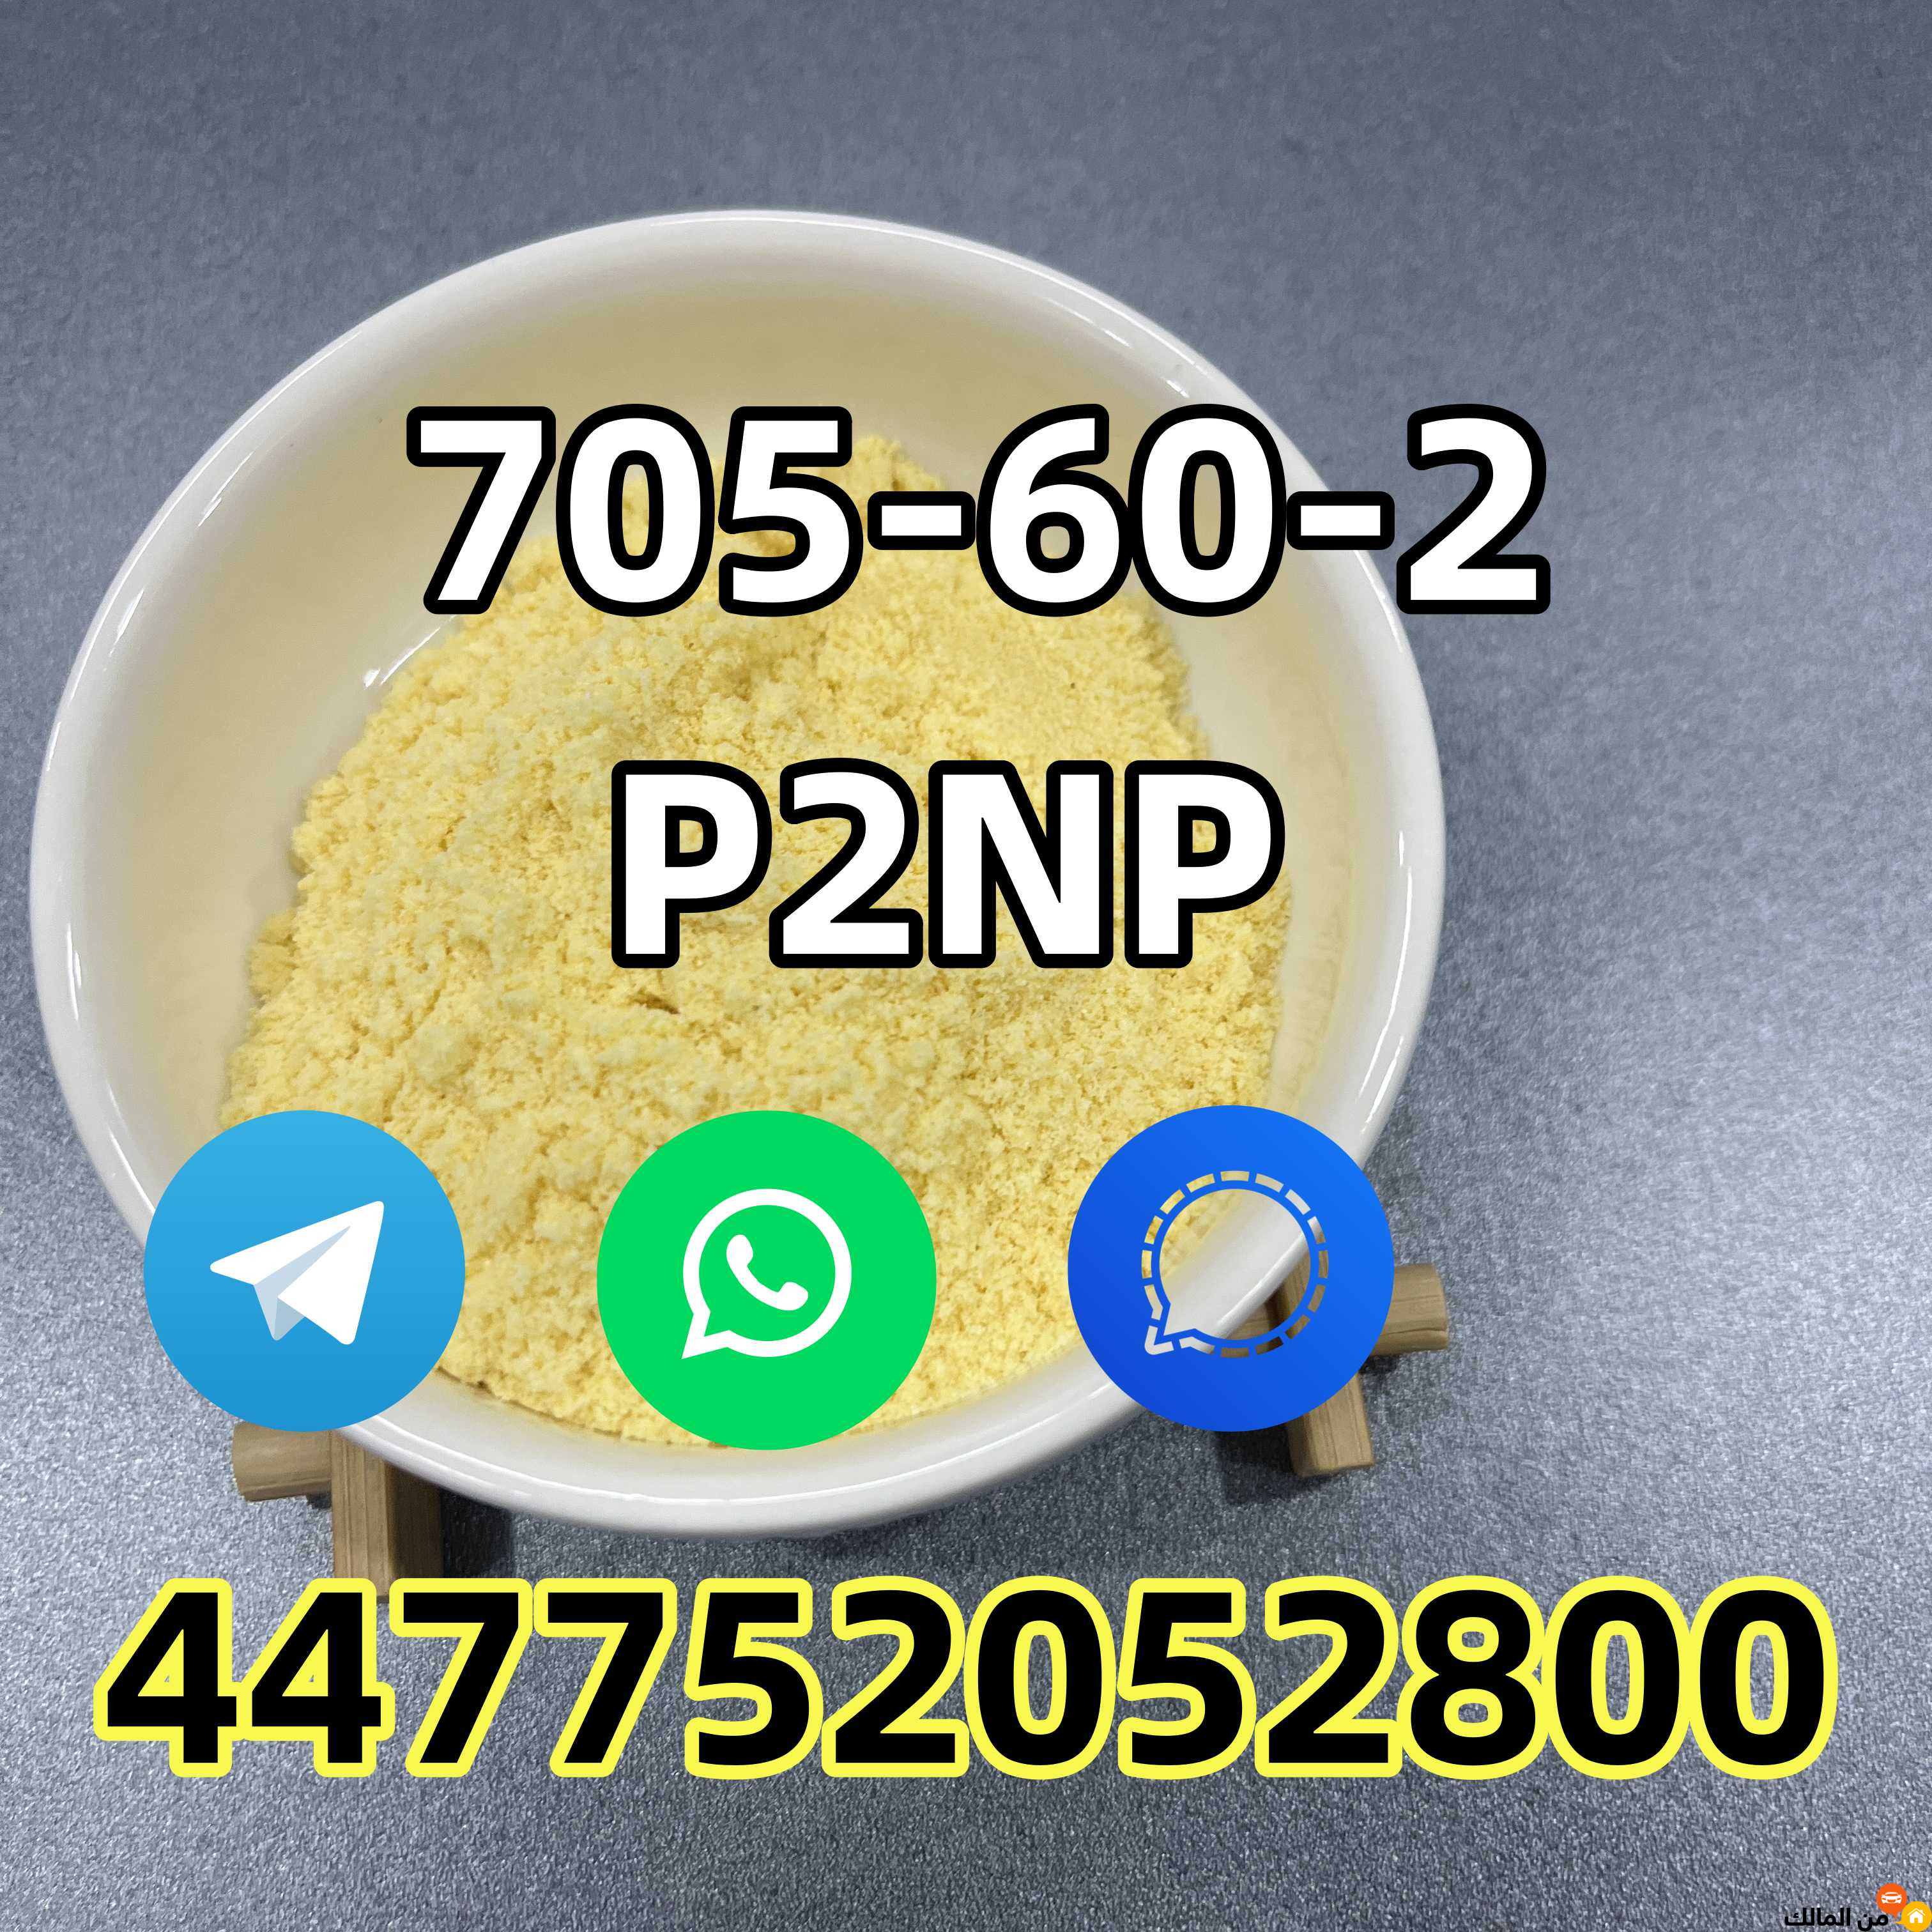 1-phenyl-2-nitropropene Cas 705-60-2 at Best Price P2NP powder